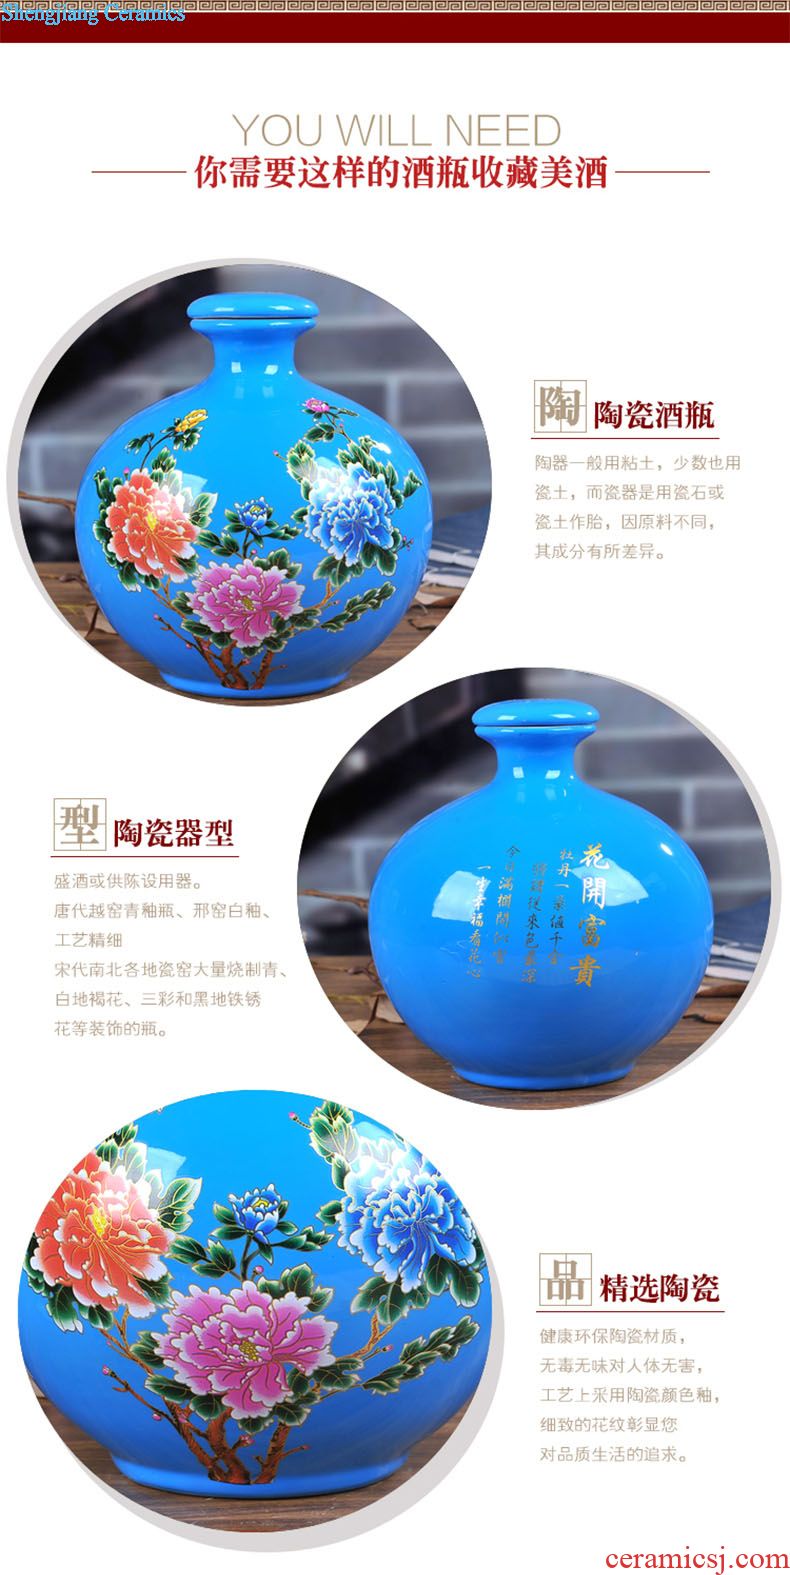 Jingdezhen ceramic bottle 10 jins to antique hand-painted bubble bottle little jars household seal wine bottle is empty